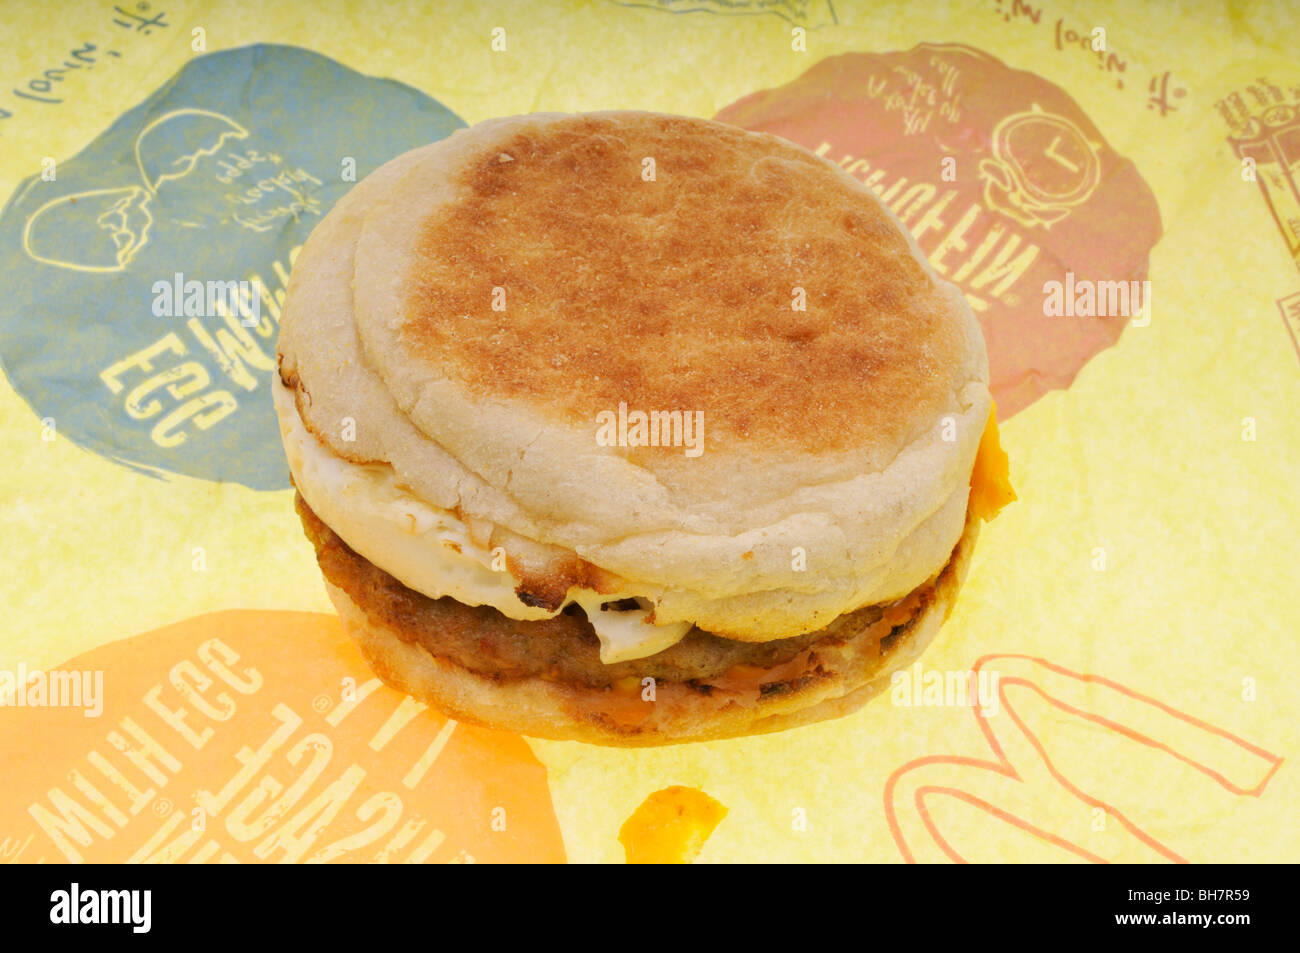 Œuf et fromage saucisse Mcdonalds mcmuffin breakfast sandwich muffin anglais sur l'emballage usa Banque D'Images